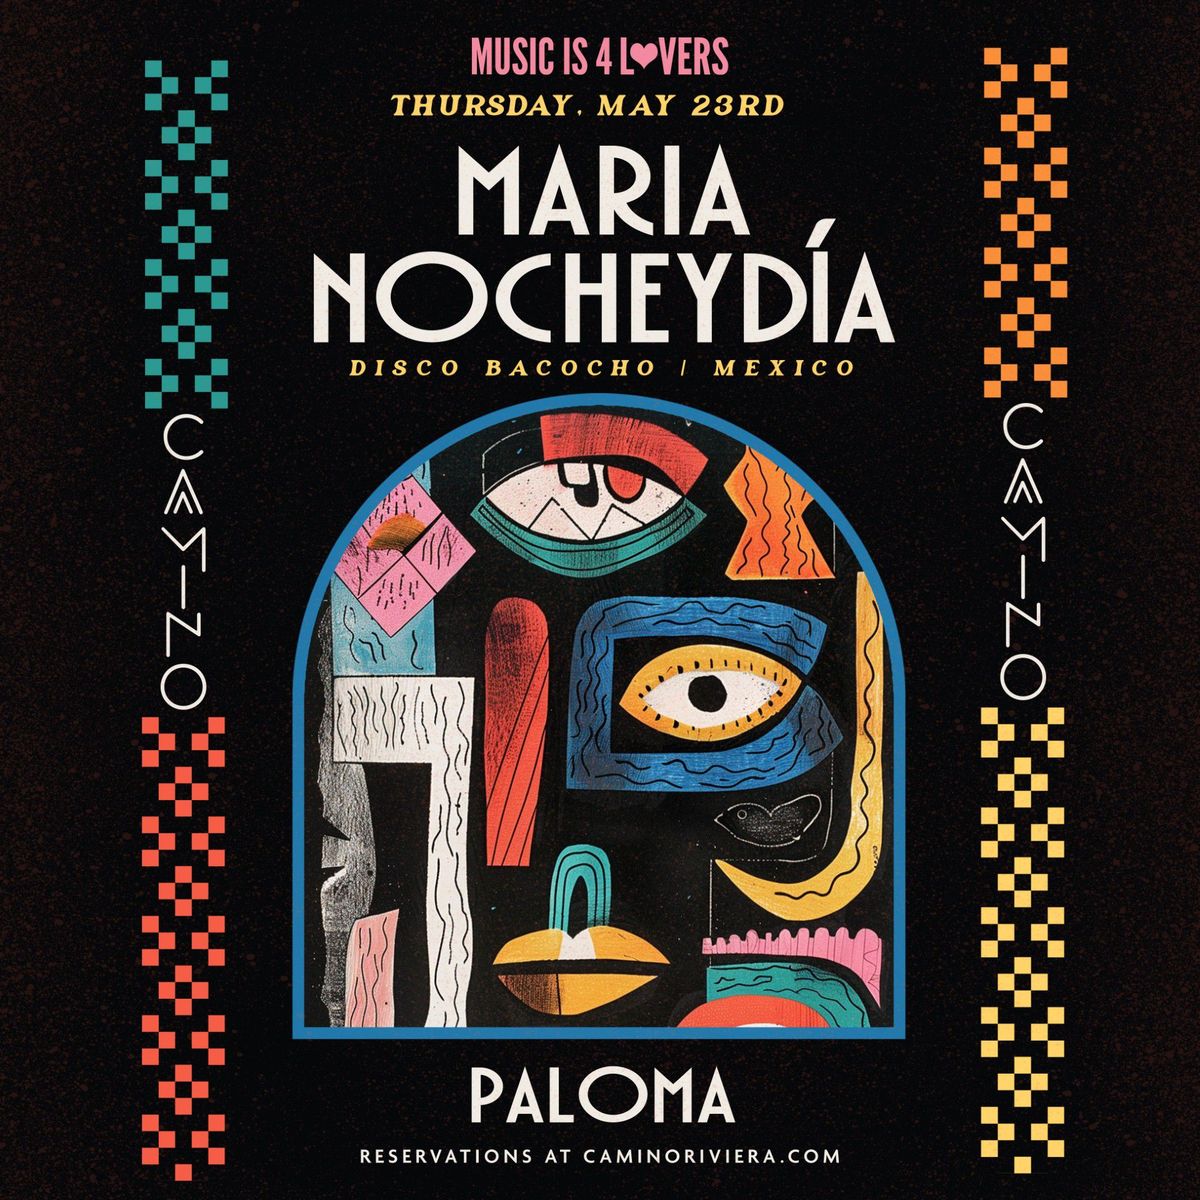 MARIA NOCHEYDIA [DISCO BACOCHO | MEXICO] at Camino Riviera - NO COVER